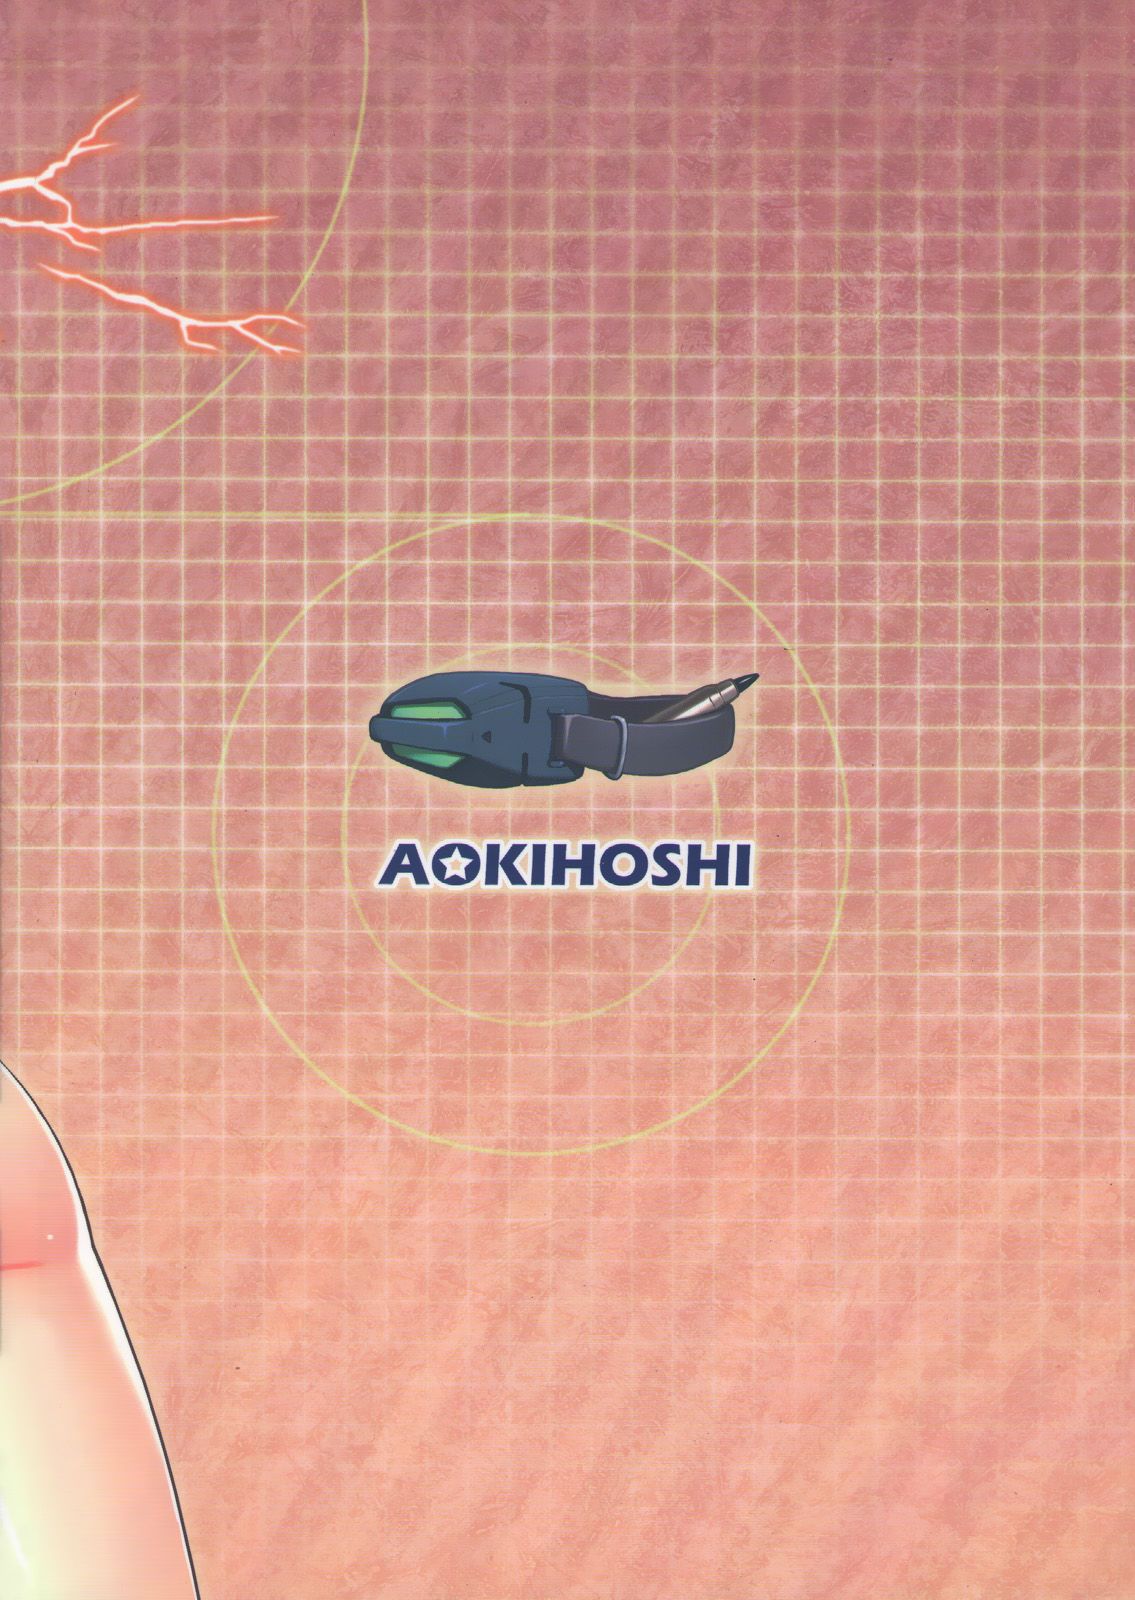 (cwt27) aokihoshi (flyking) toaru Houkou keine Kekkan denki ein bestimmte Wandern radio Lärm (toaru majutsu keine index) ehcove